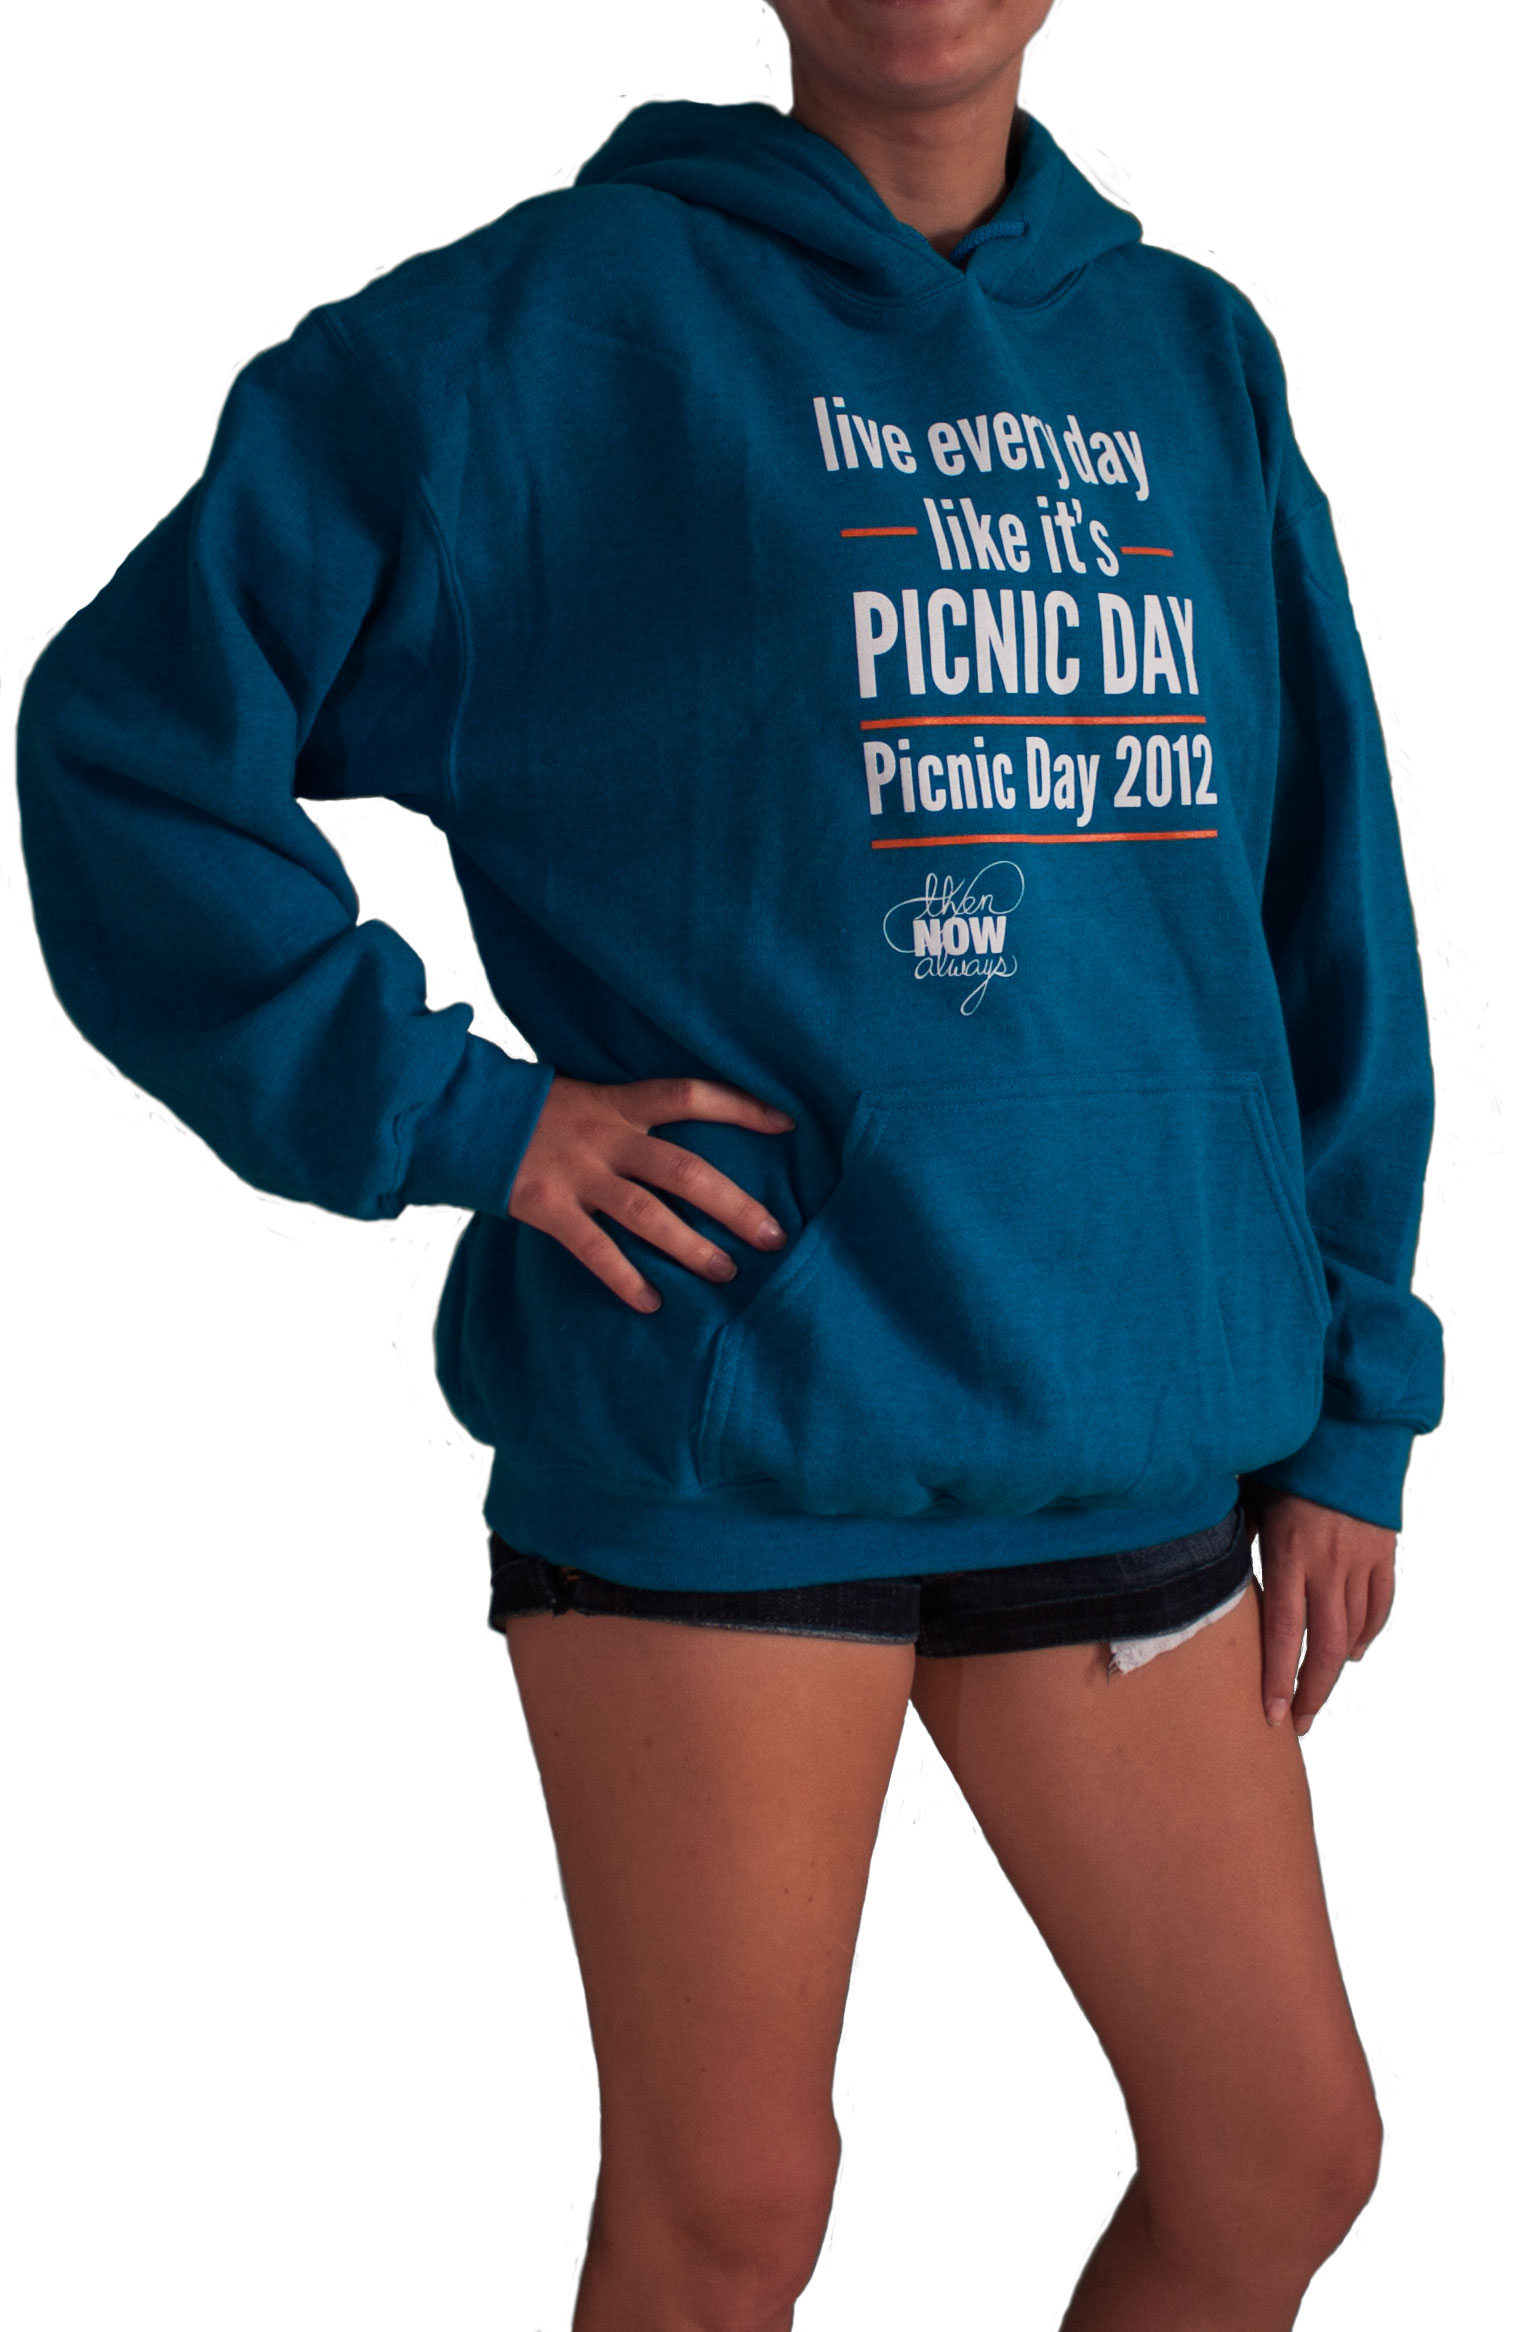 Picnic Day directors' sweatshirt